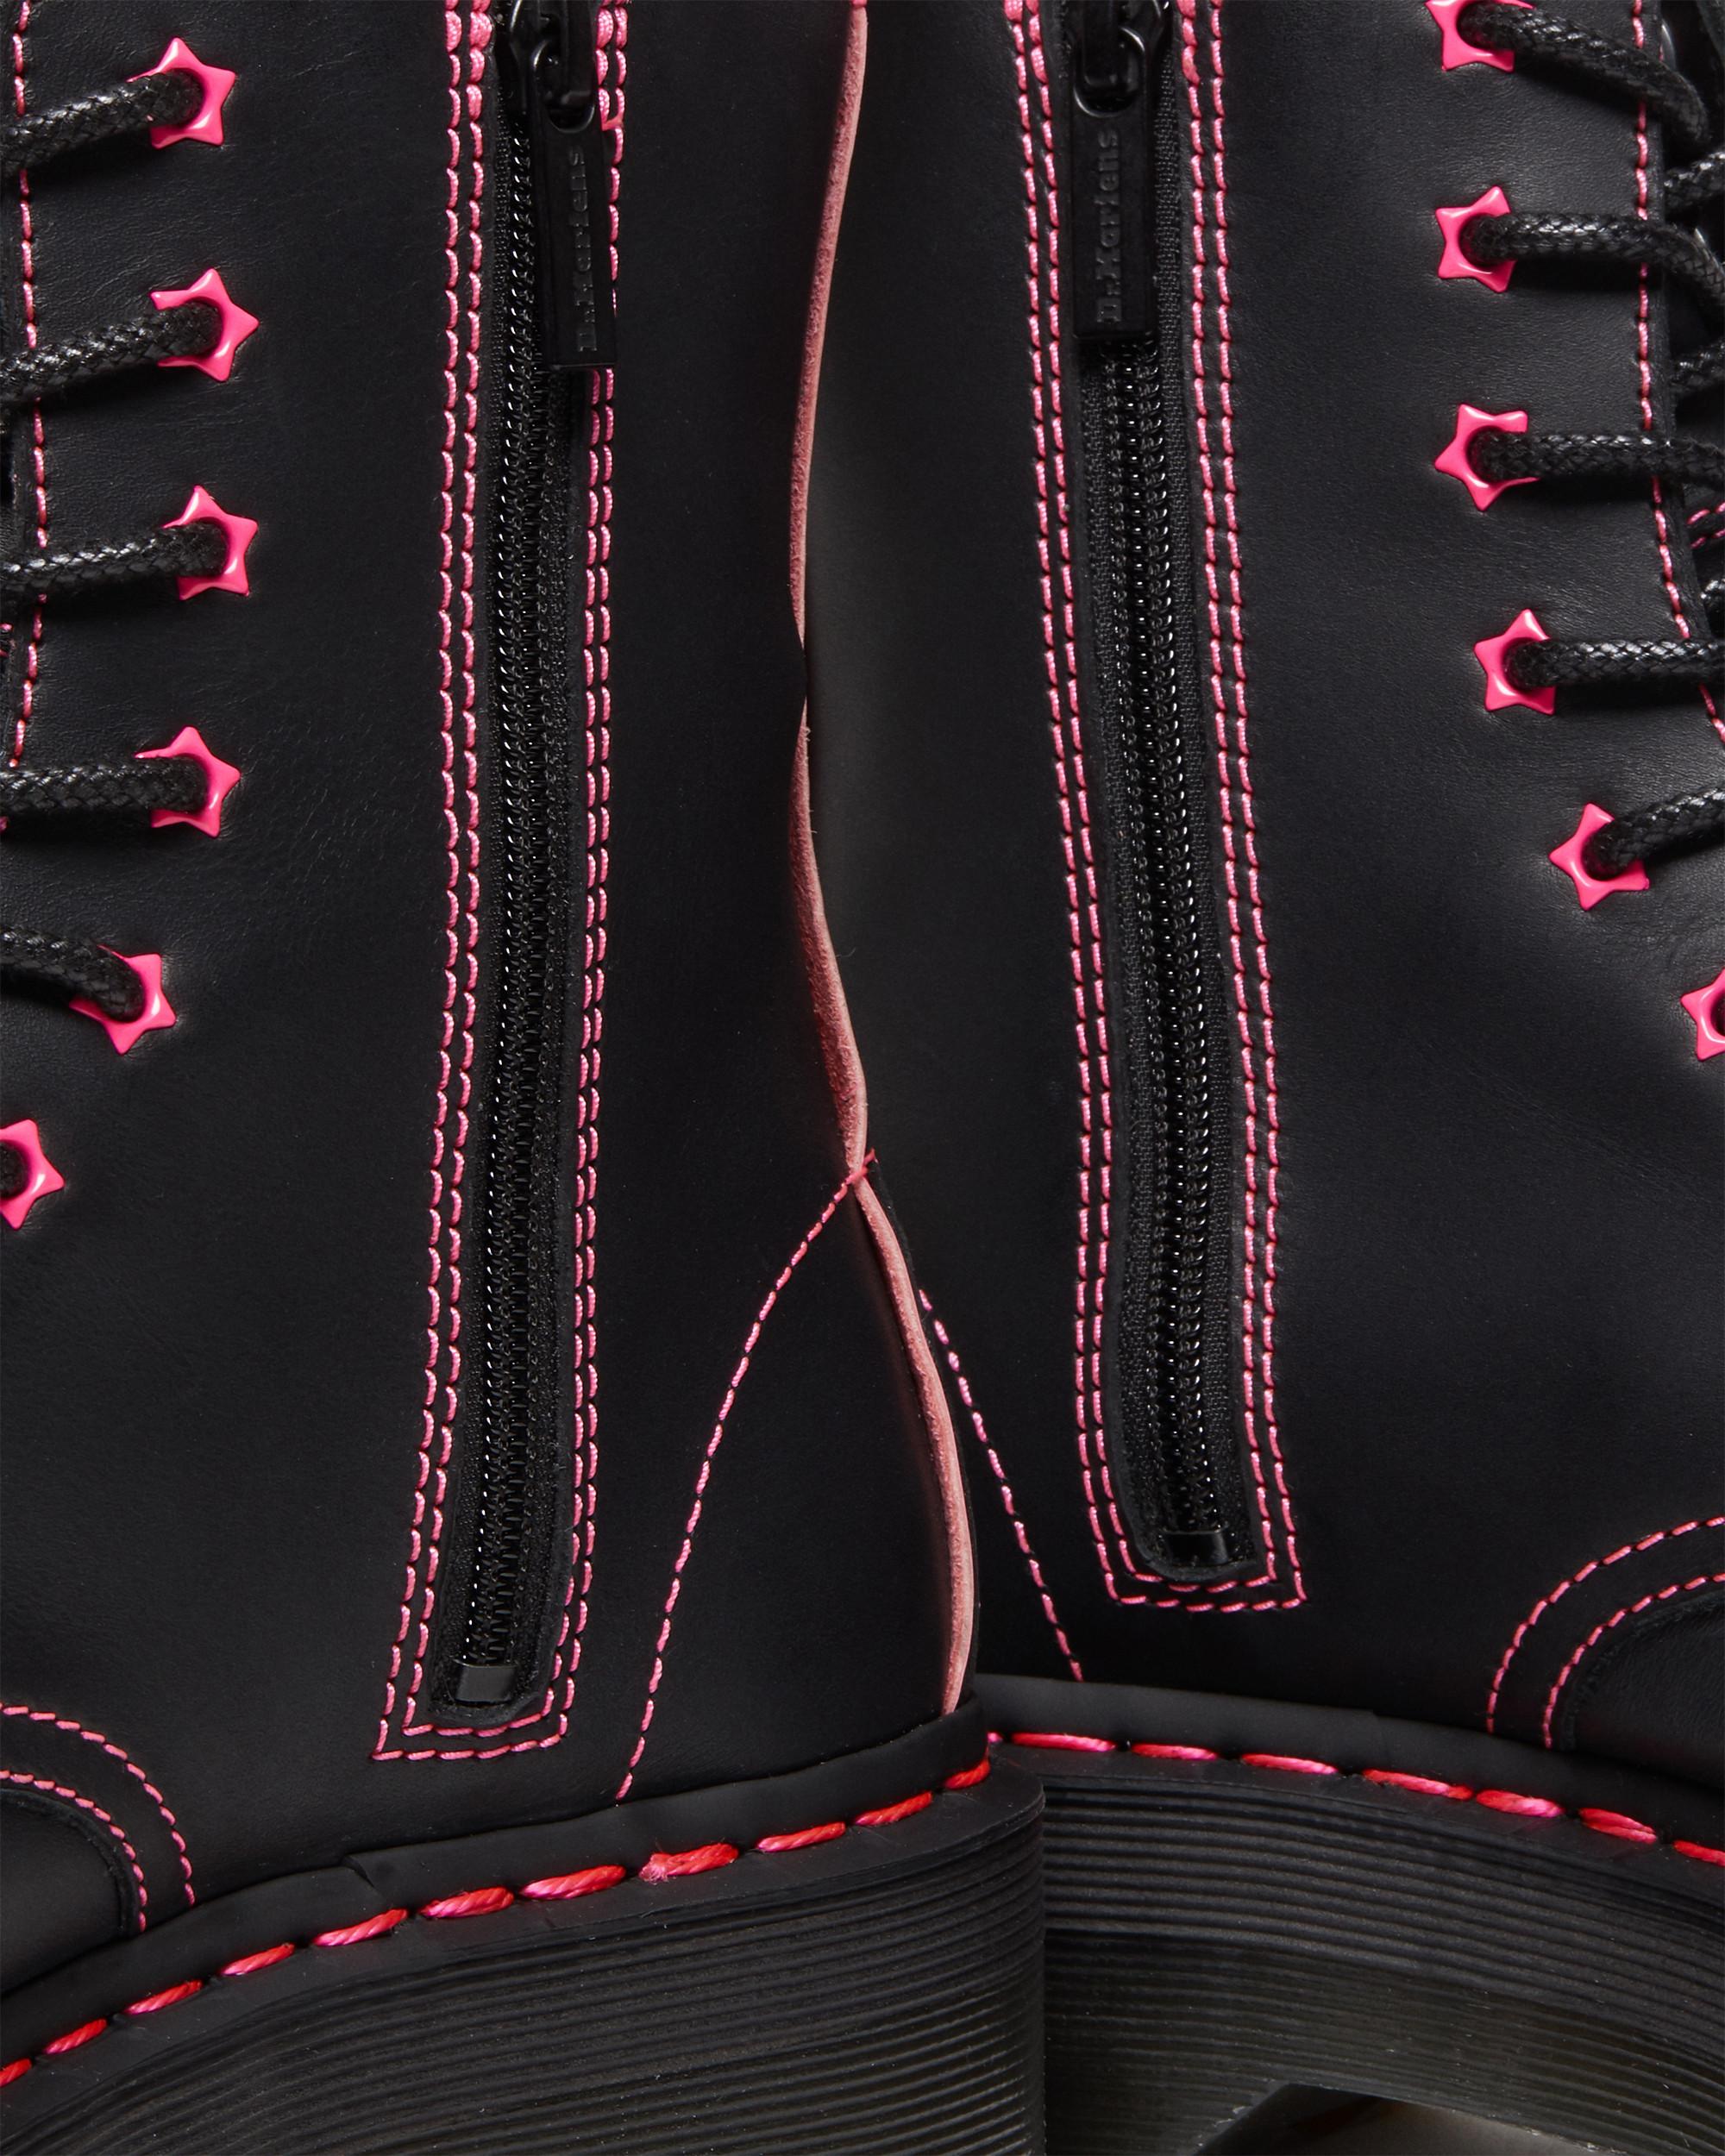 Jadon II Boot Neon Star Leather Platforms in Black+Pink